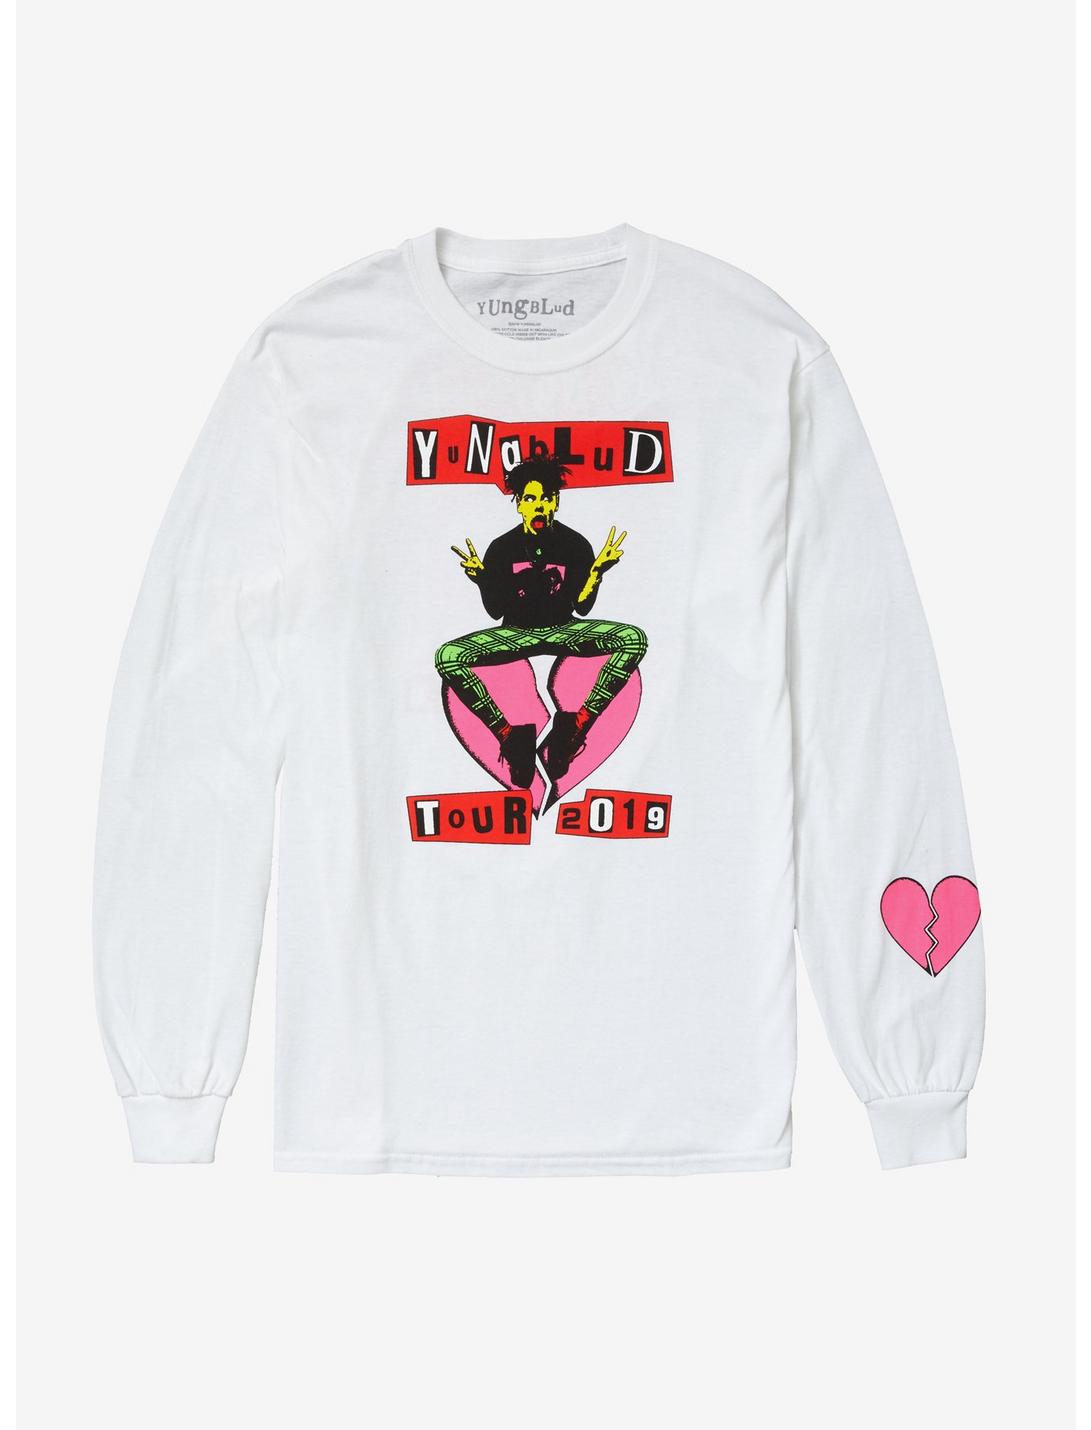 Yungblud Tour 2019 Long-Sleeve T-Shirt, WHITE, hi-res